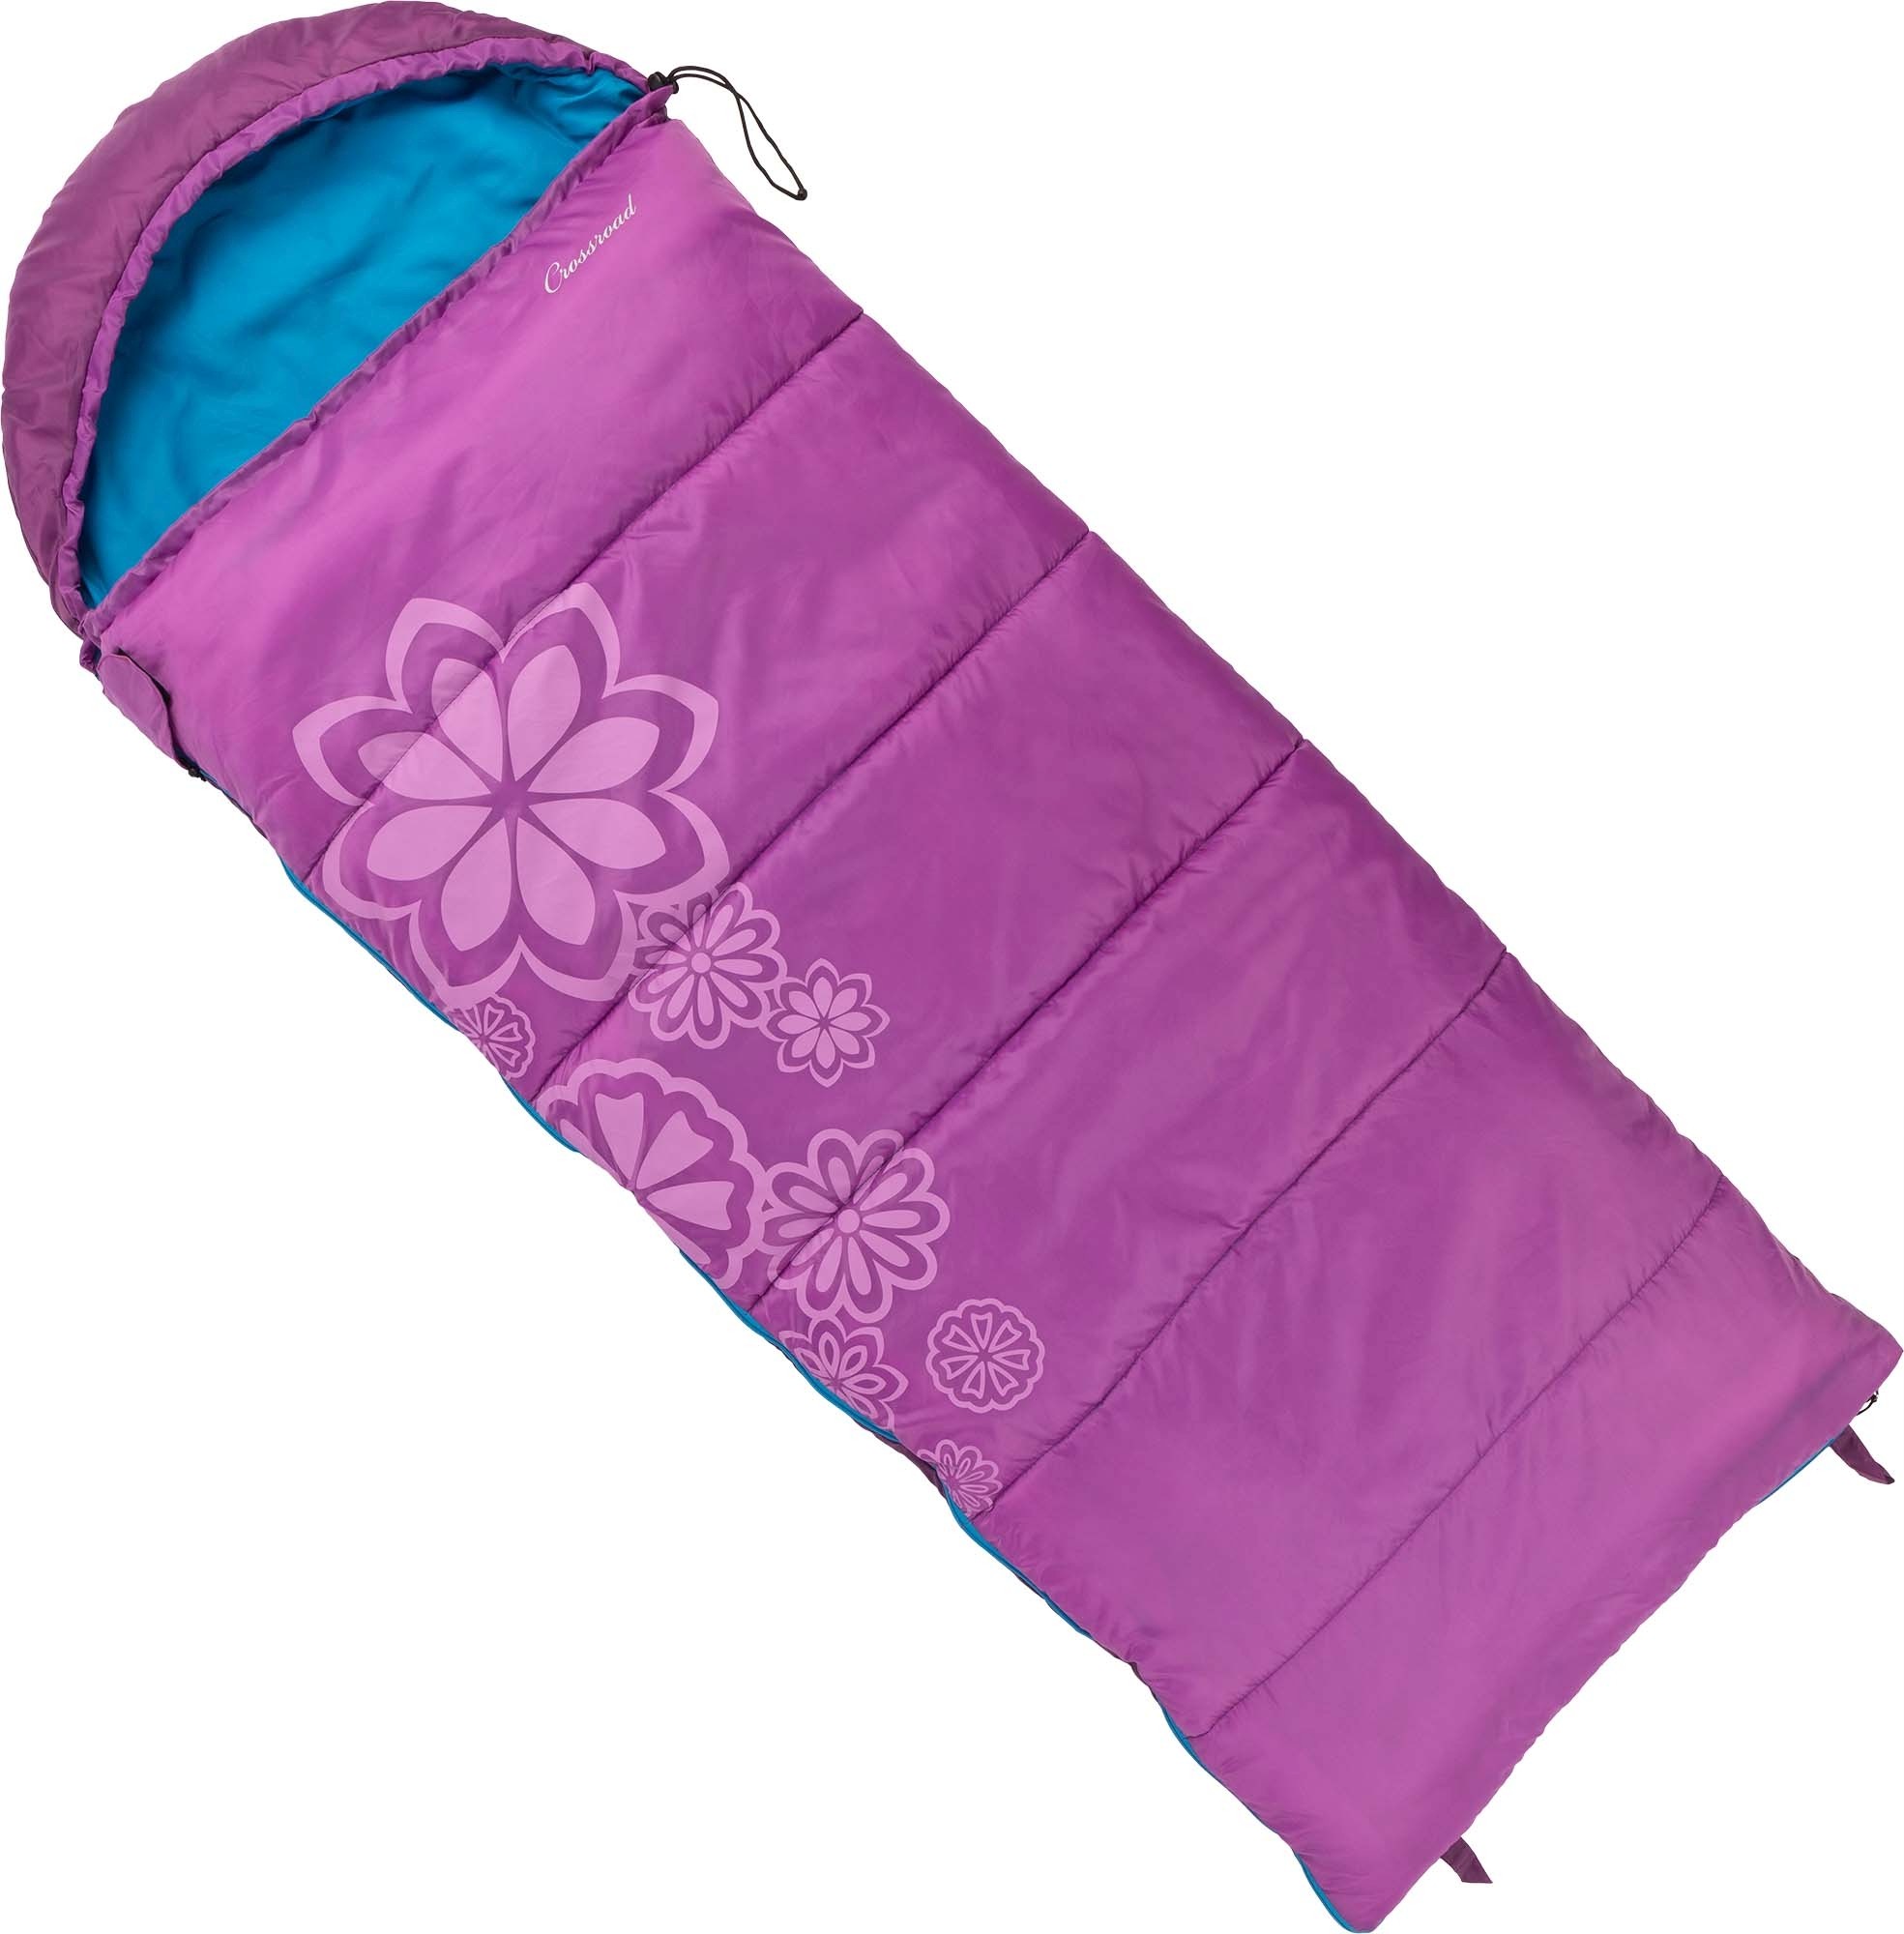 Kids' sleeping bag